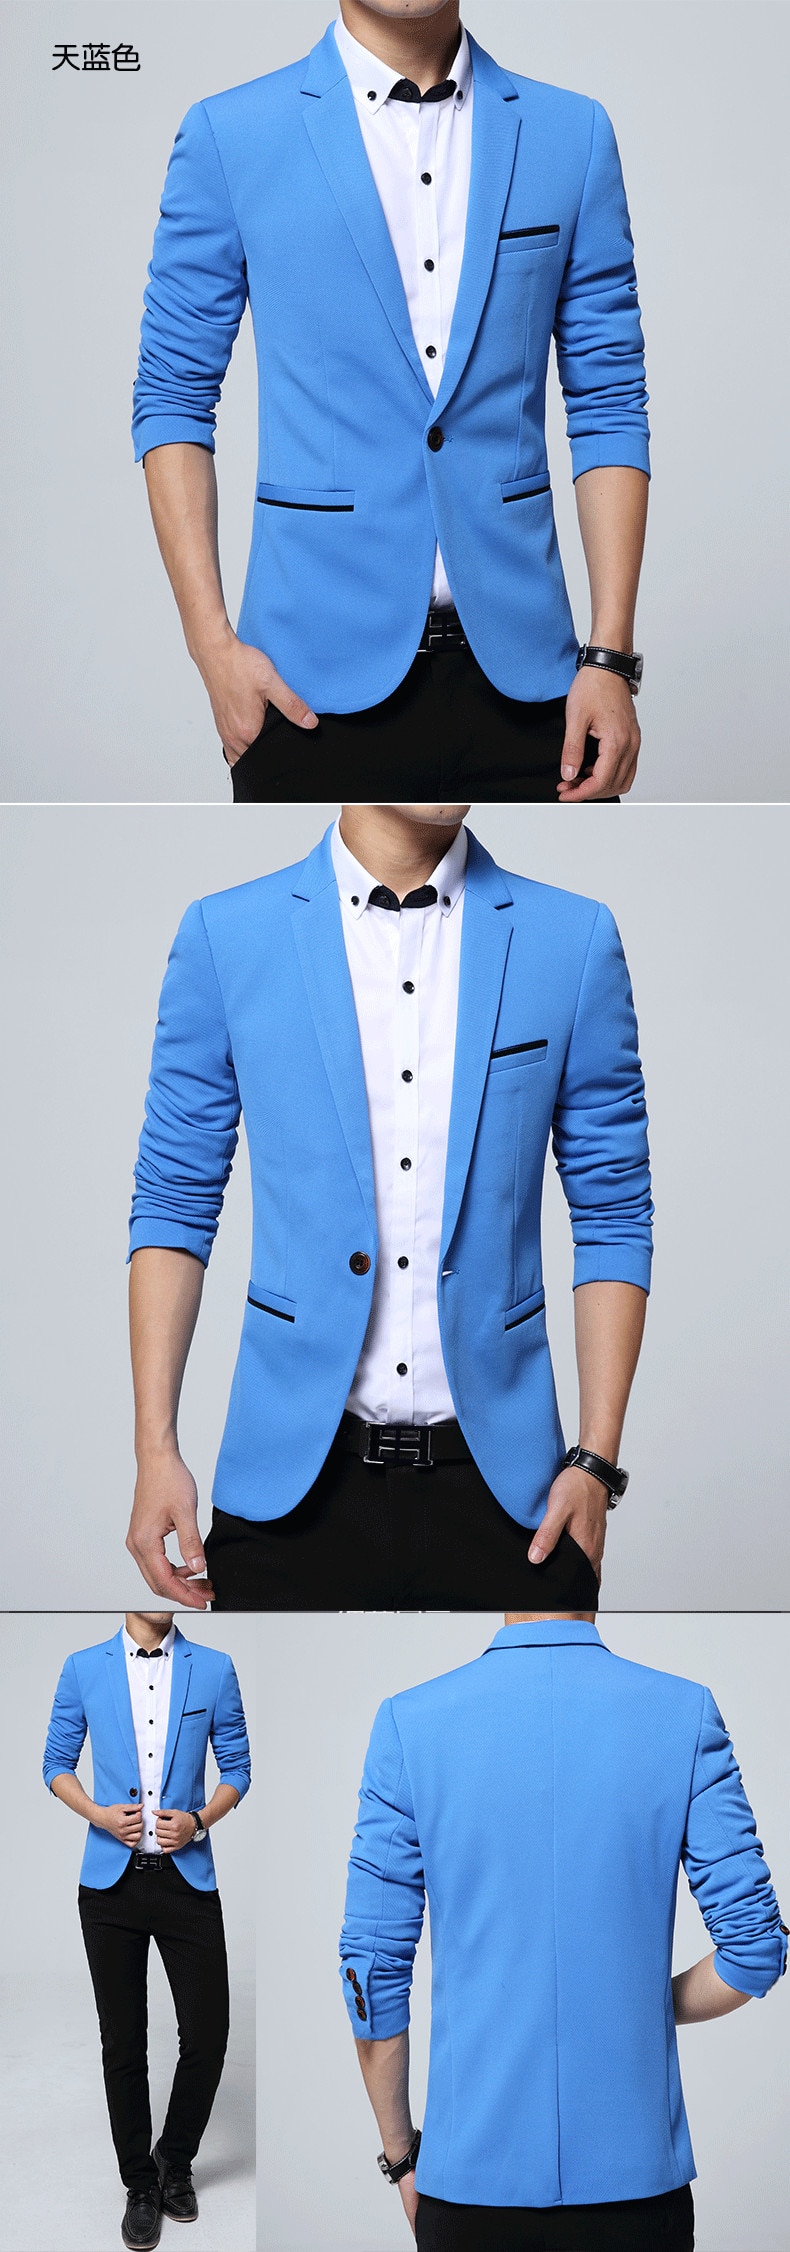 New Arrival Luxury Men Blazer New Spring Fashion Brand High Quality Cotton Slim Fit Dress Suit Jacket Coat